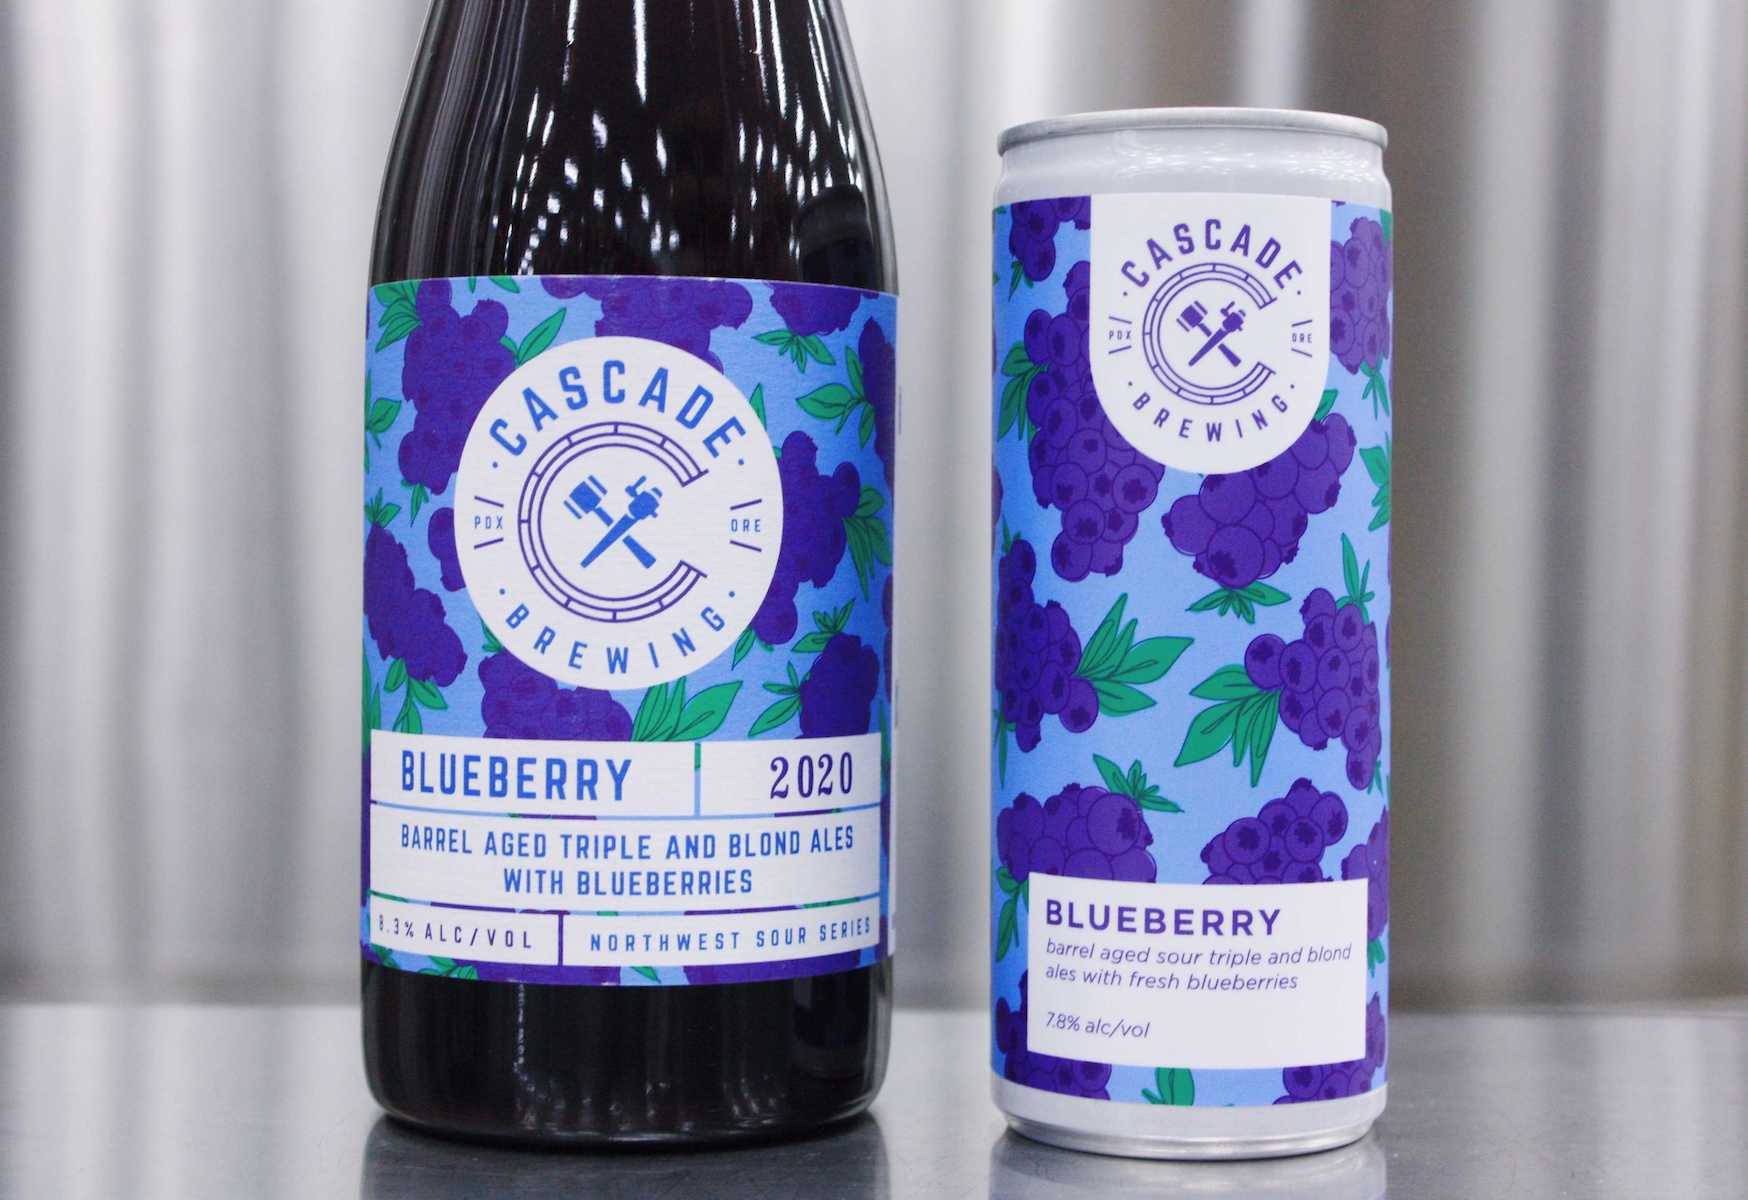 image of Cascade Blueberry 2020 courtesy of Cascade Brewing